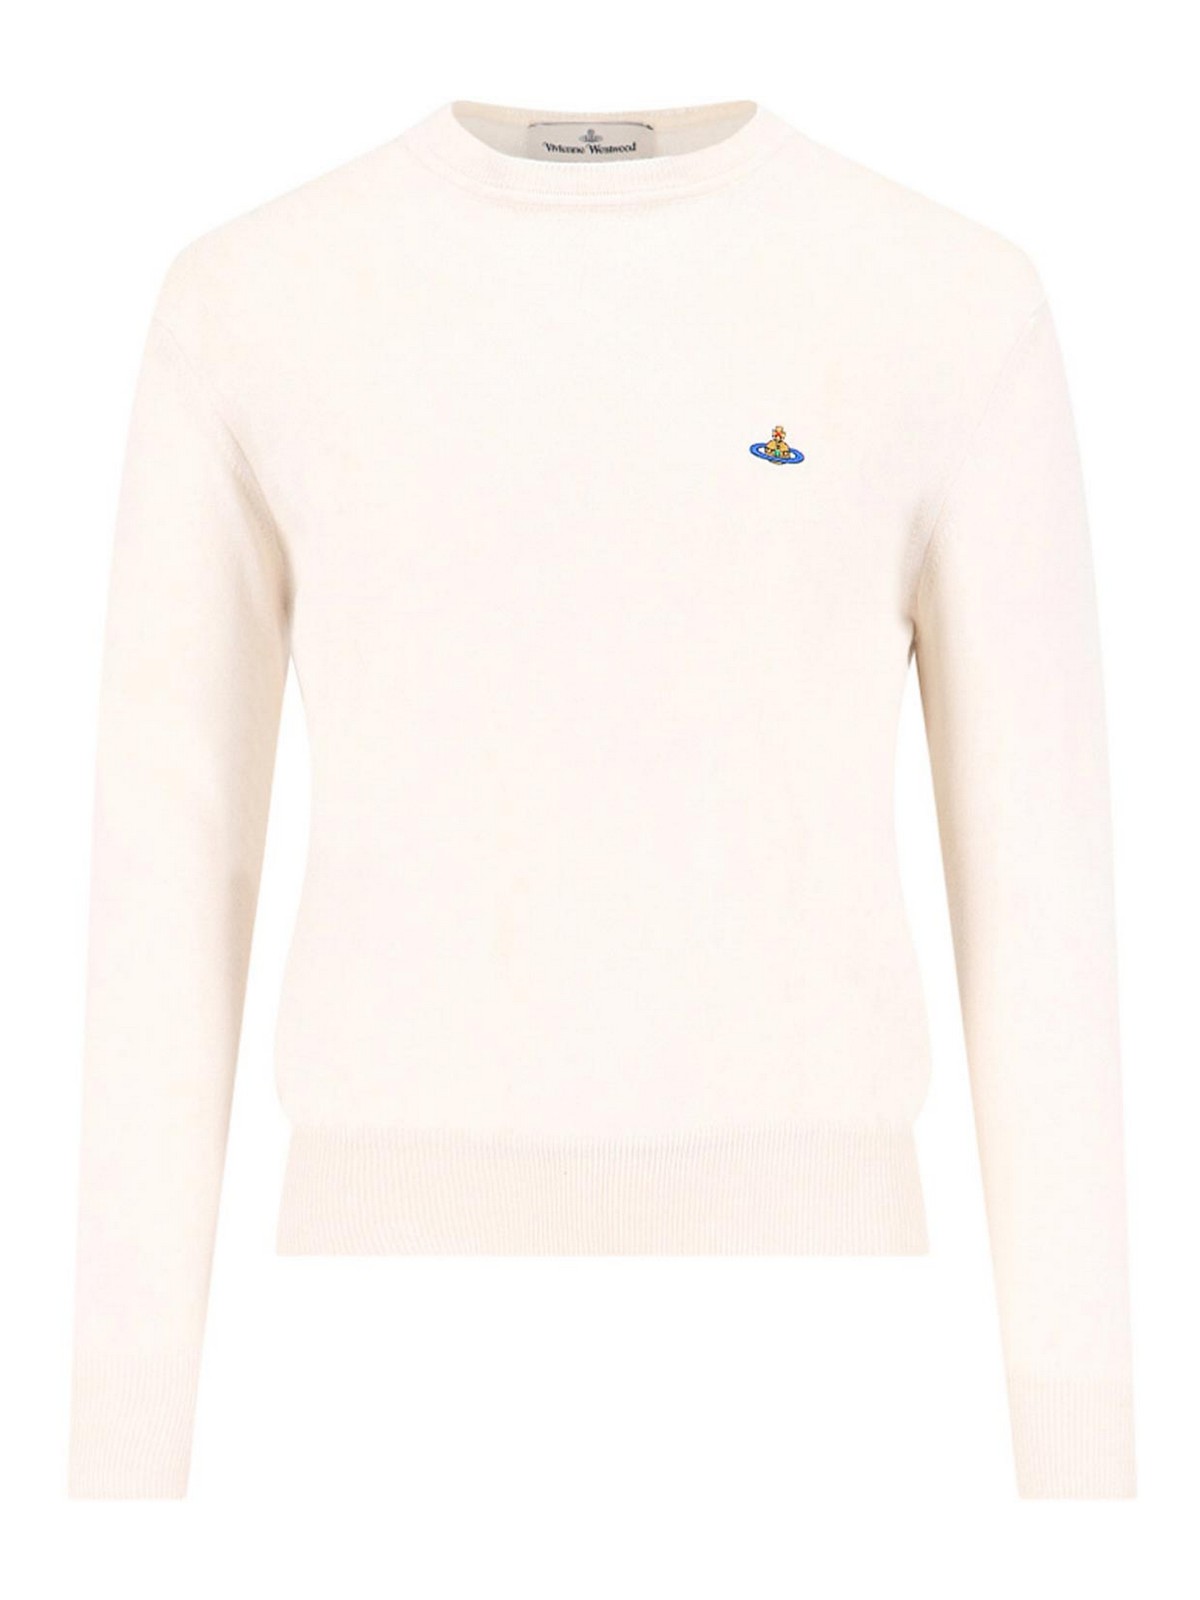 Vivienne Westwood Logo Sweater In White